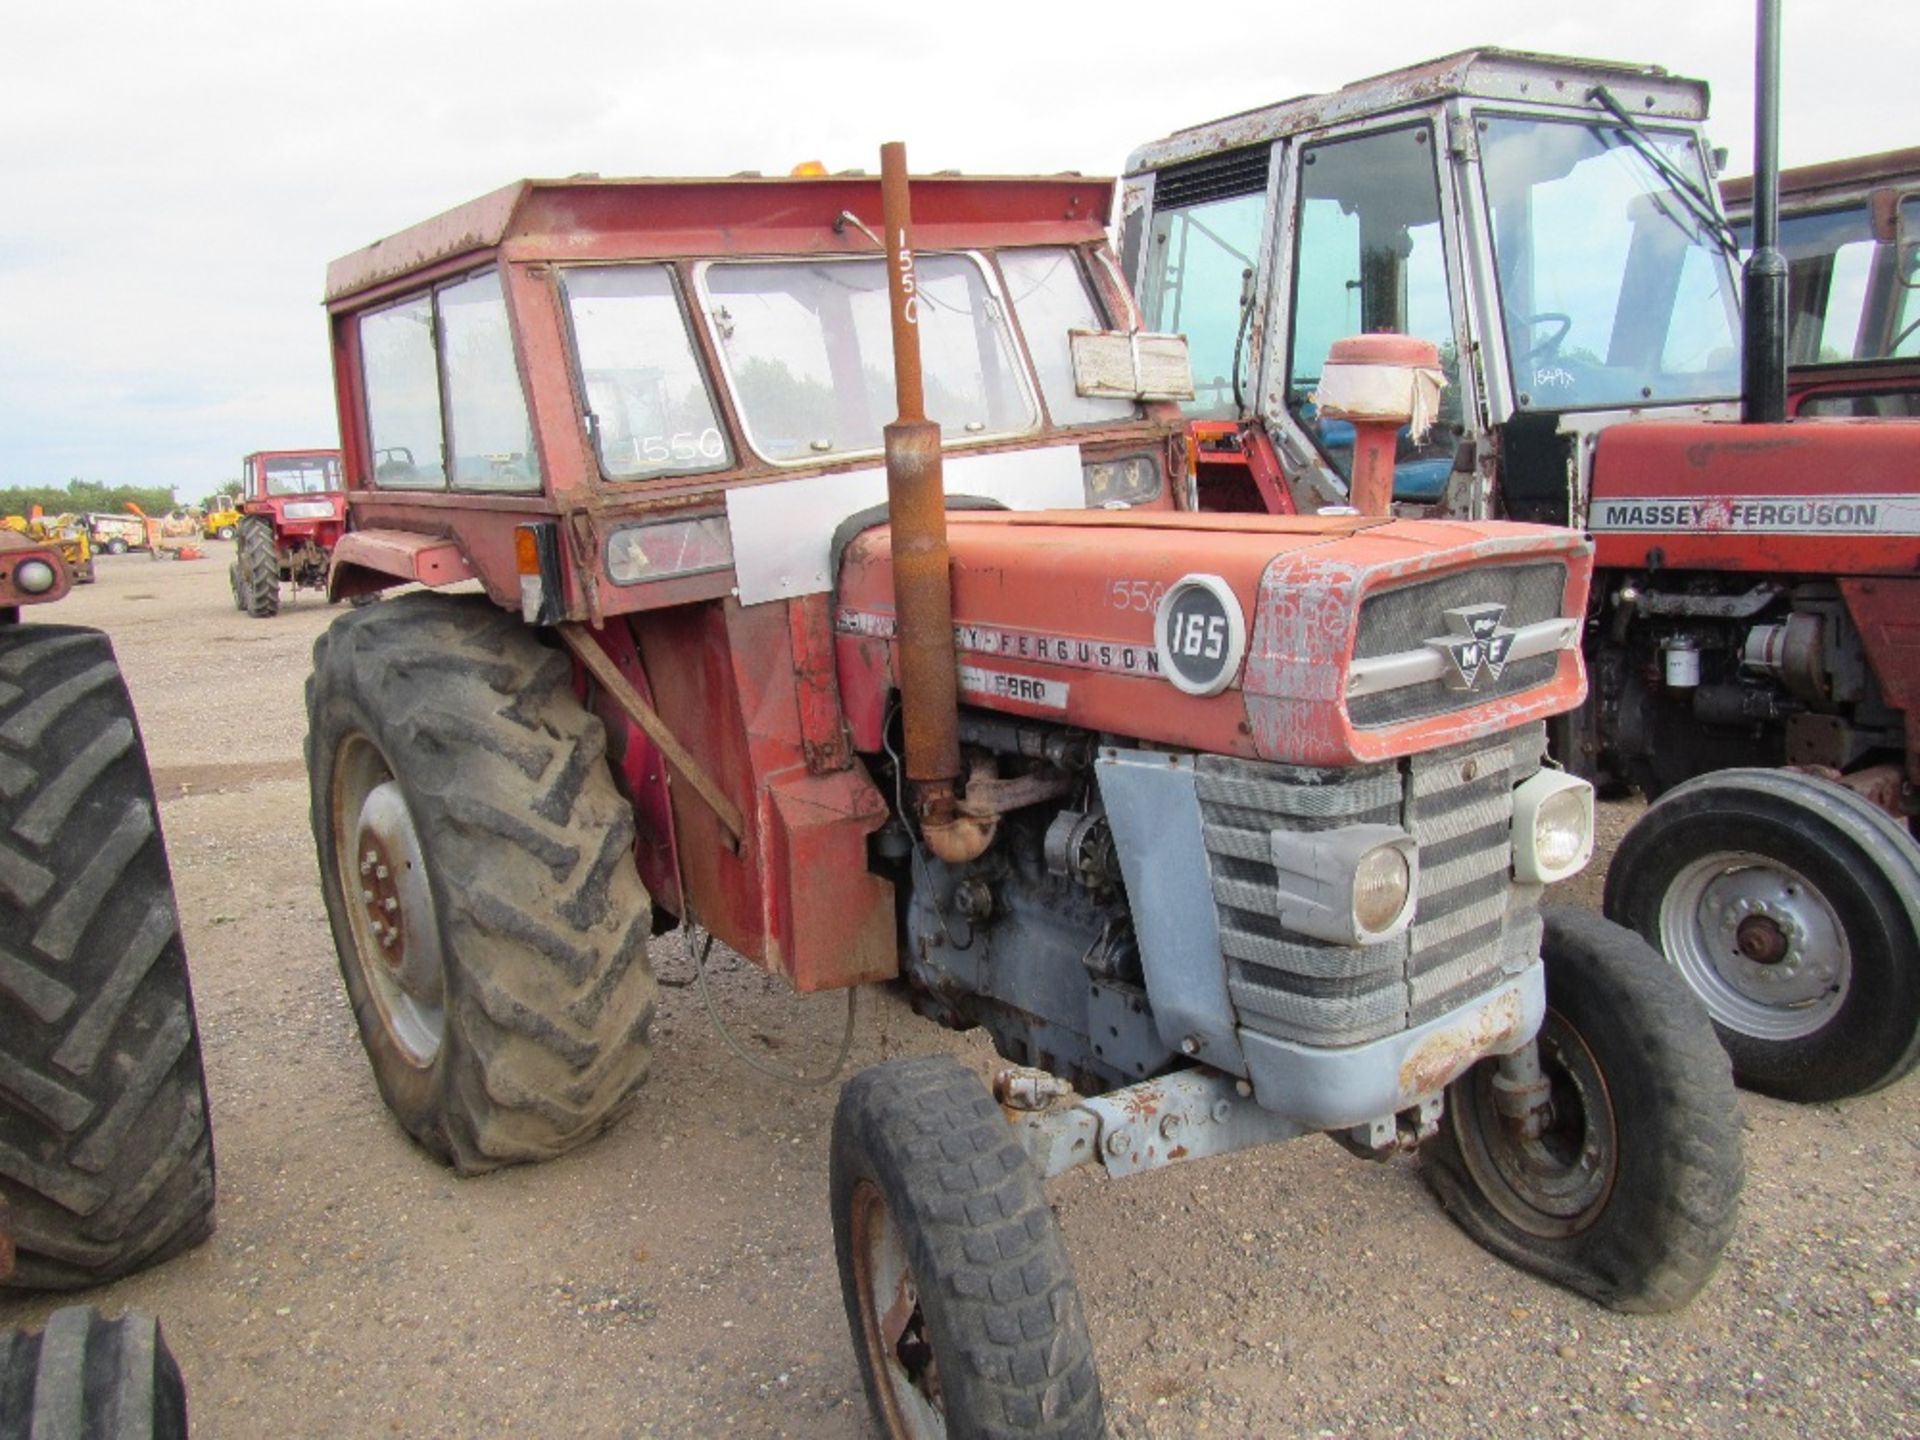 Massey Ferguson 165 Tractor - Image 2 of 4